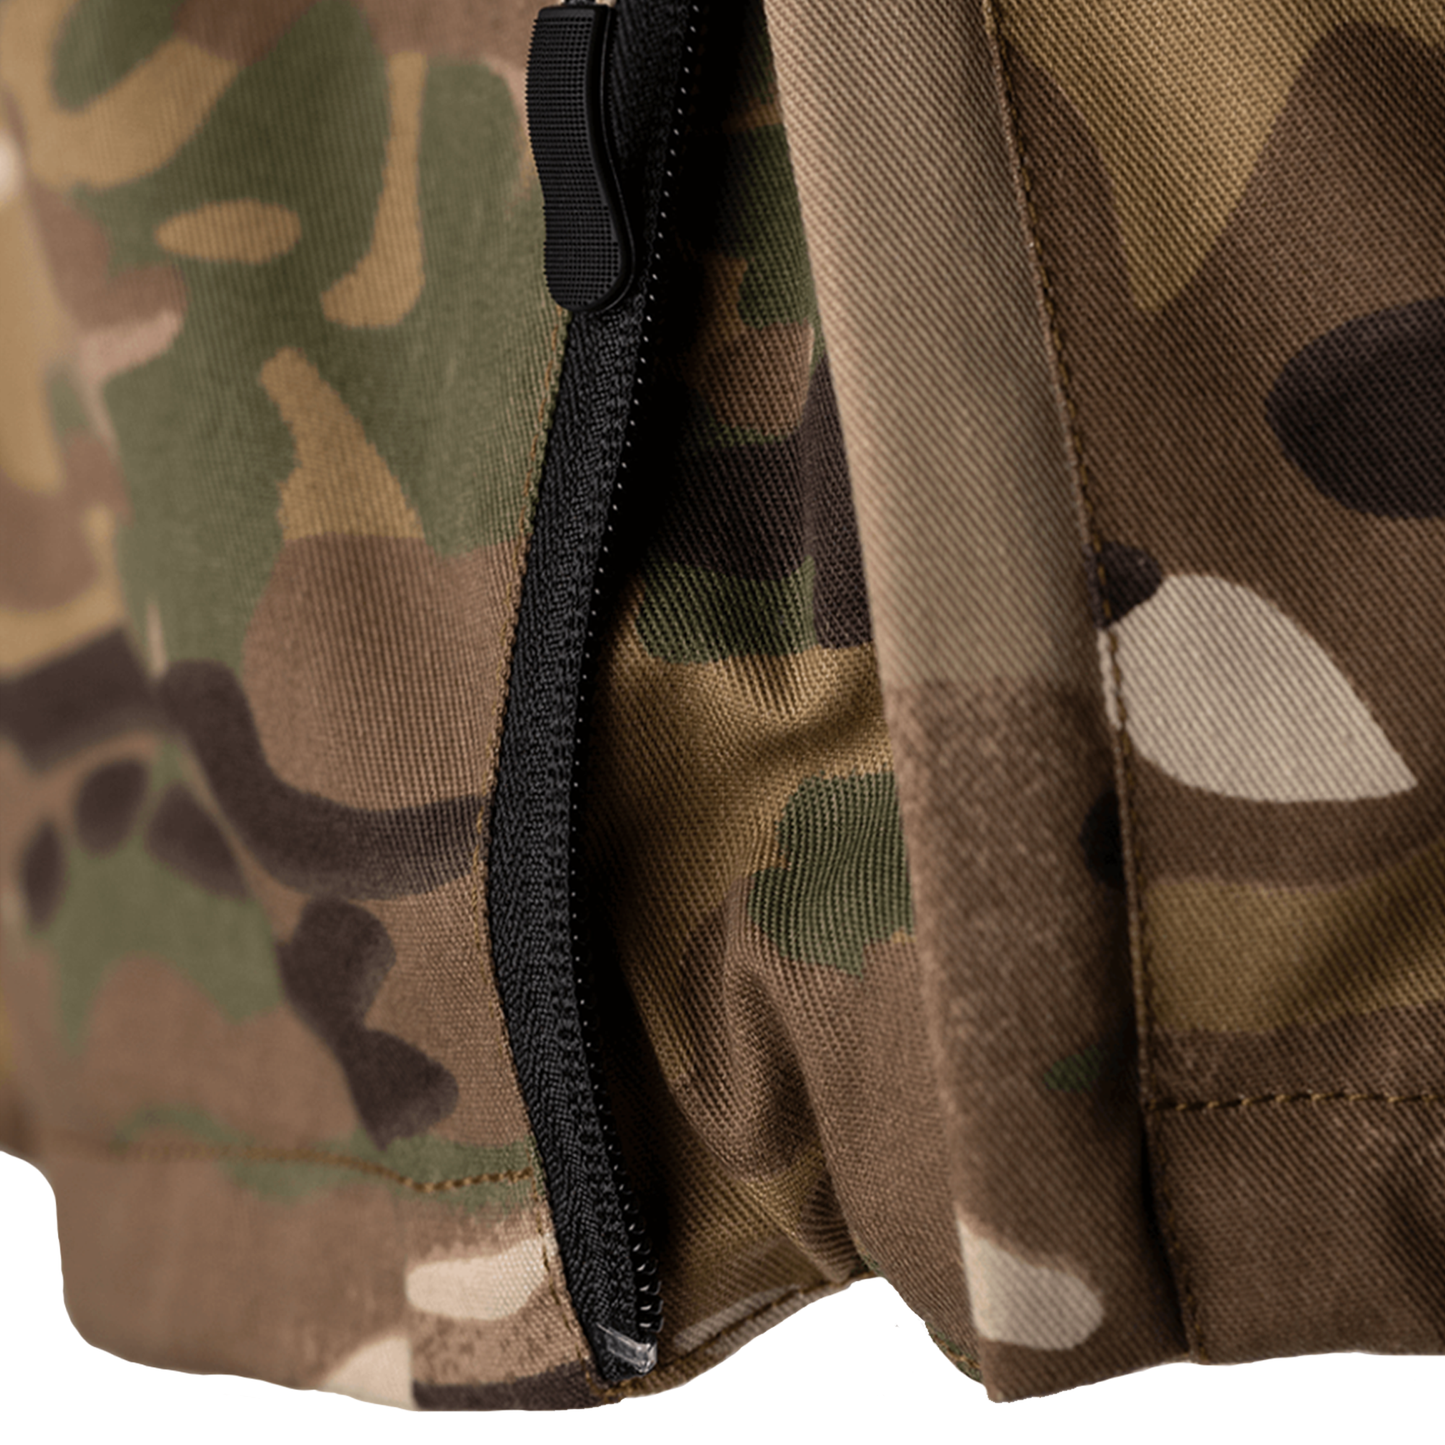 RST X Kevlar® Loadout 1/4 Zip (CE) Men's Textile Hood - Khaki Camo